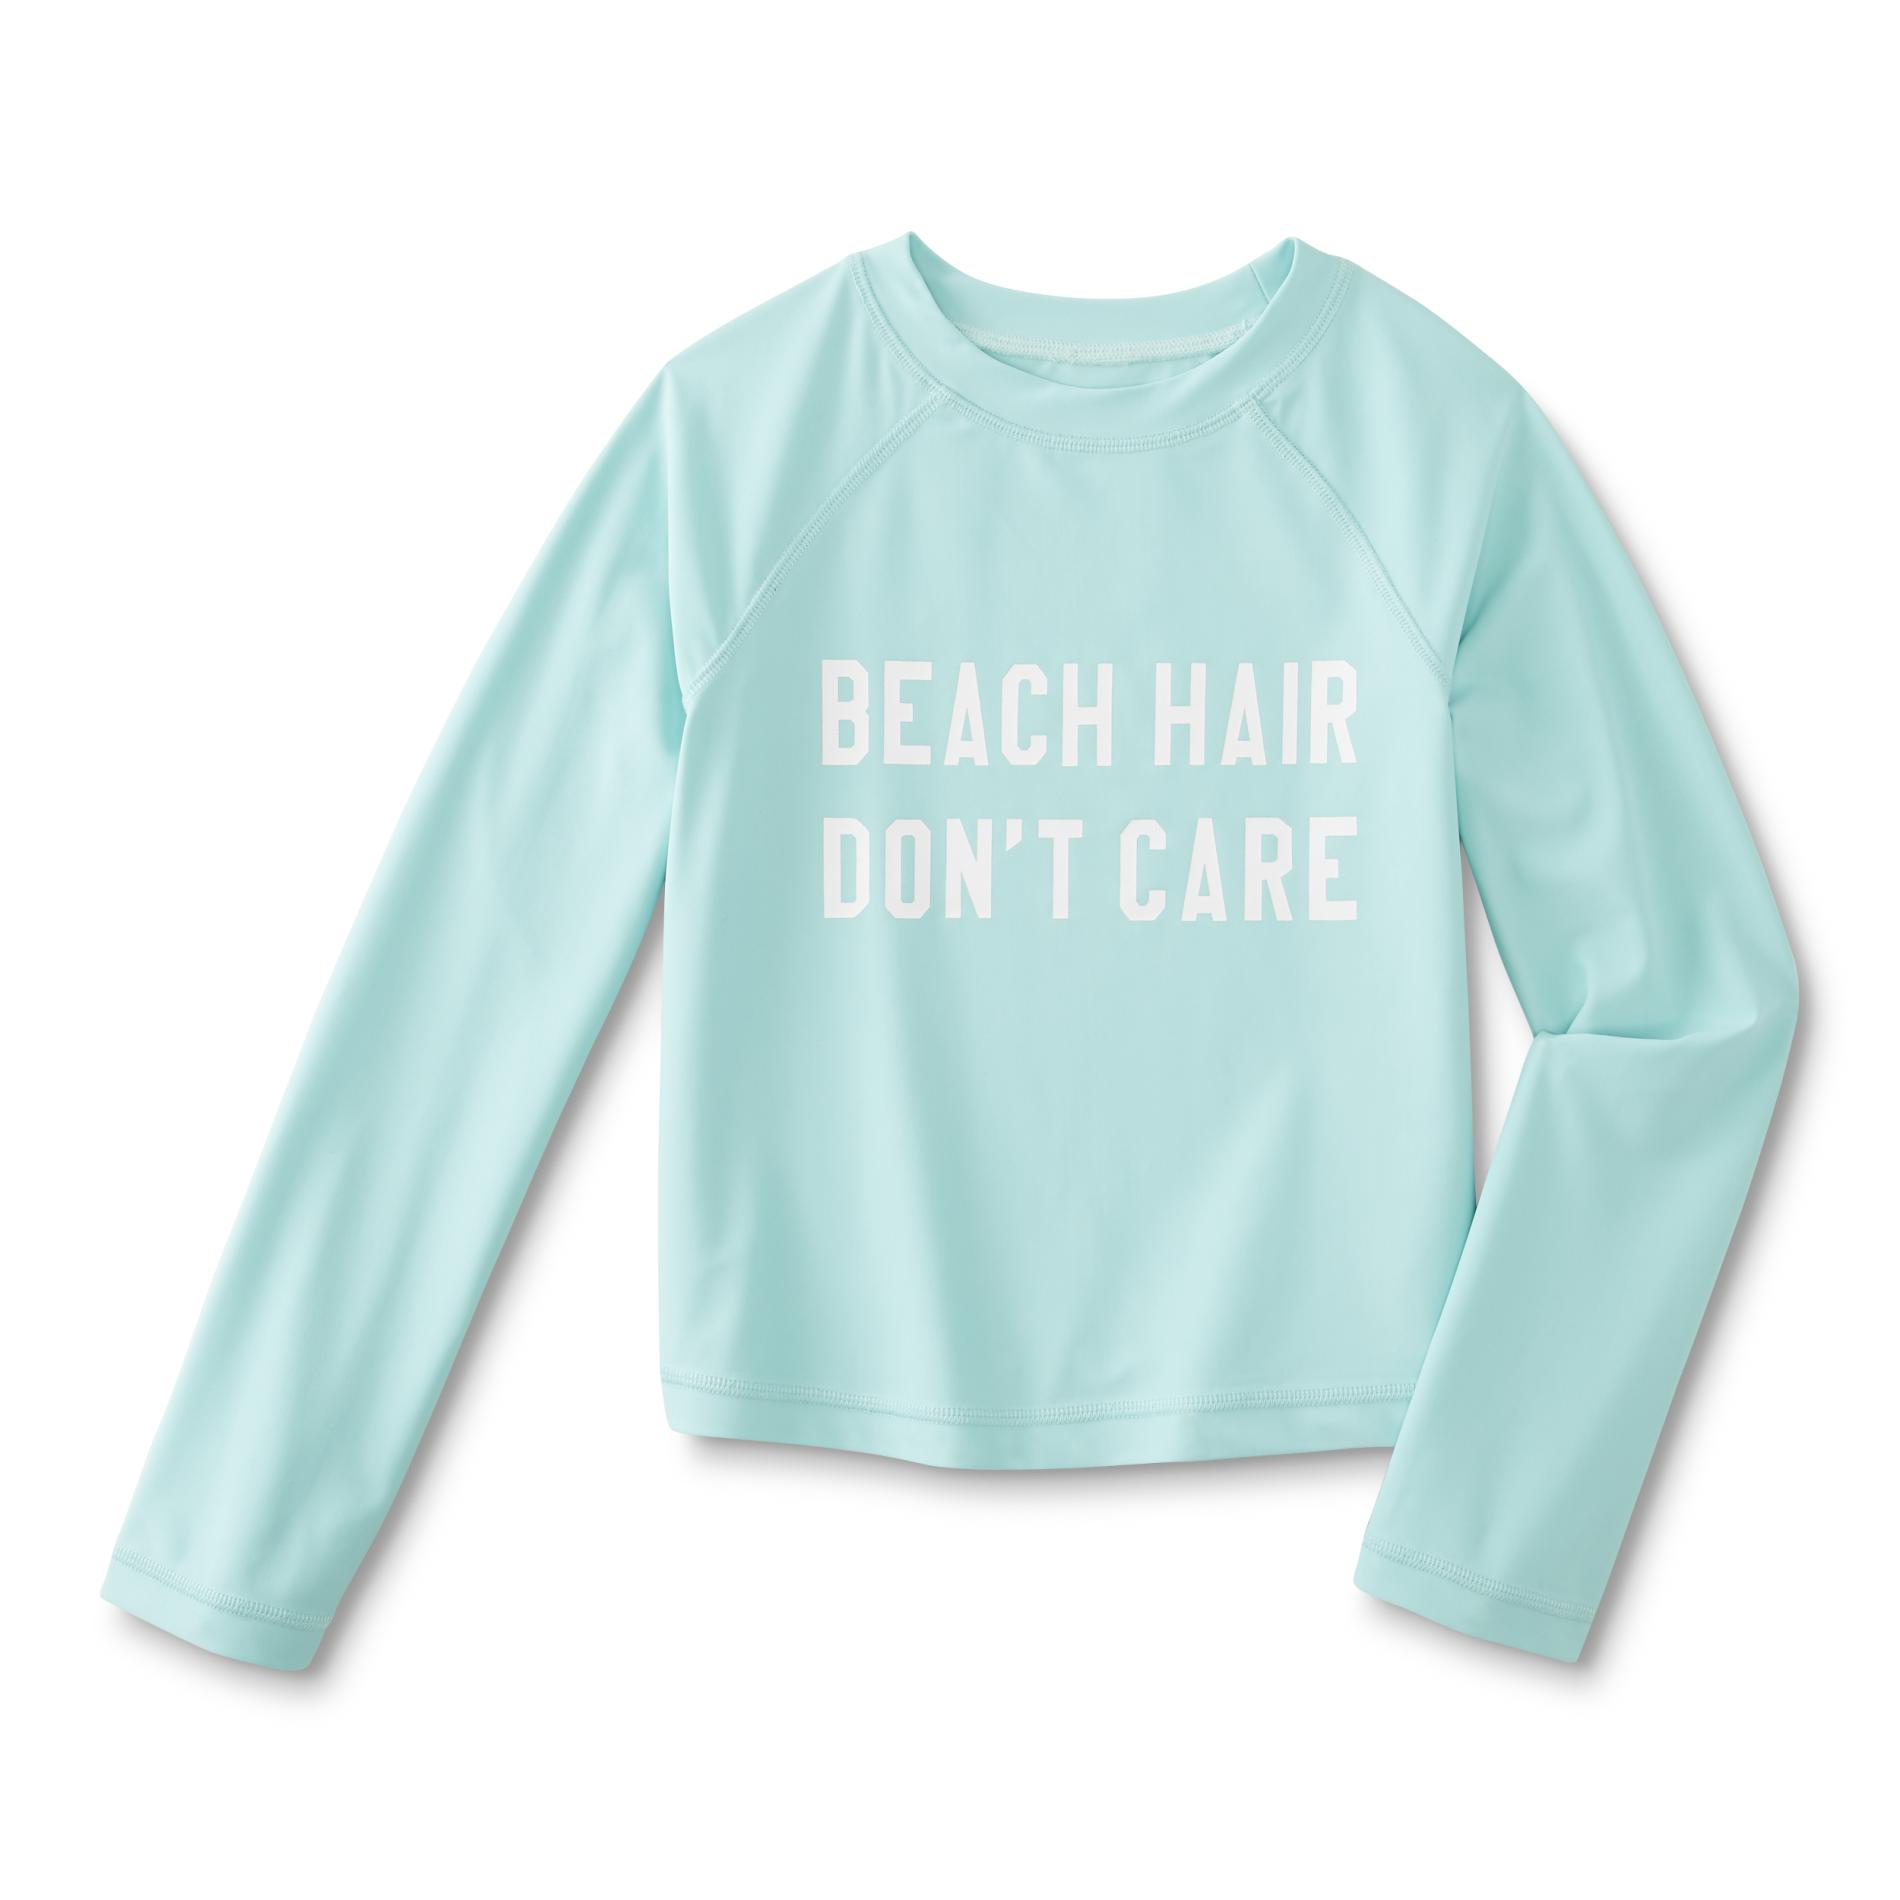 Joe Boxer Girls' Swim Rashguard - Beach Hair Don't Care